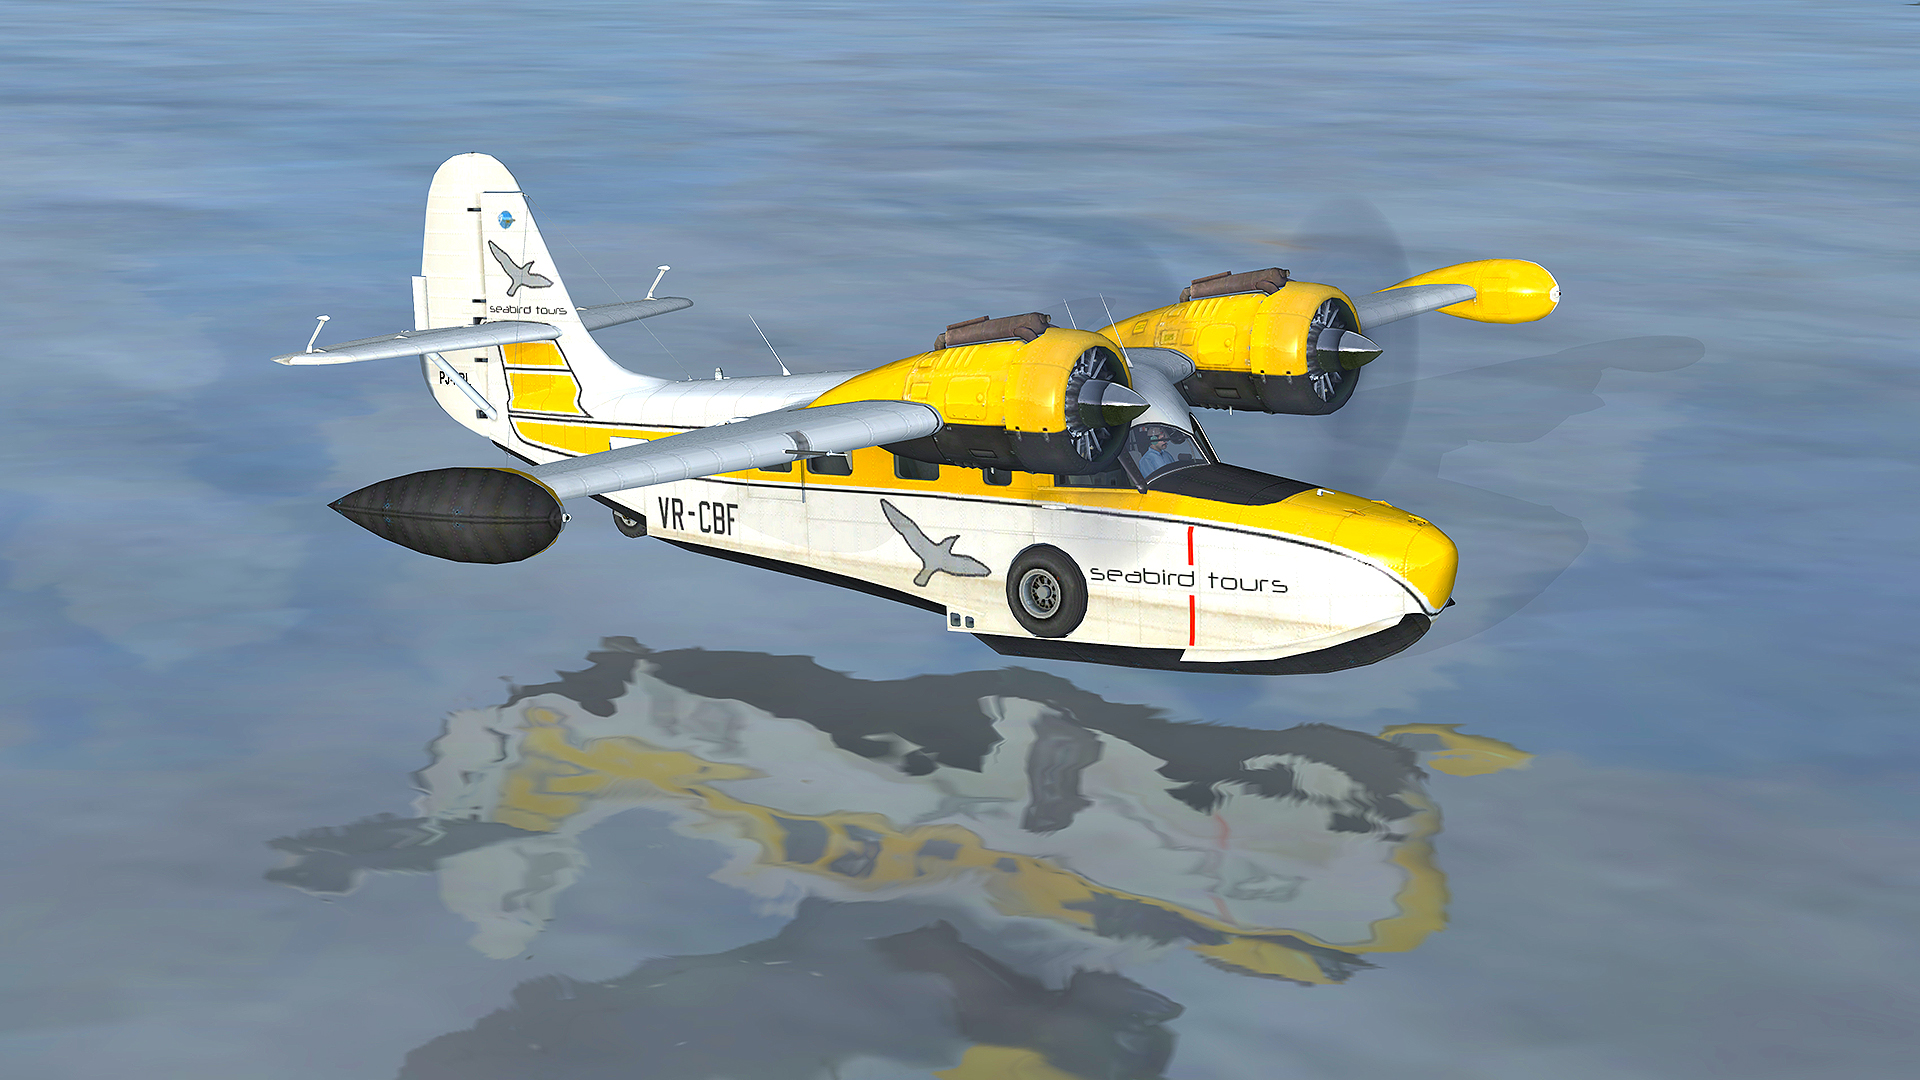 Microsoft Flight Simulator X Gold Edition - PC Flight Sim - New See Desc  882224258043